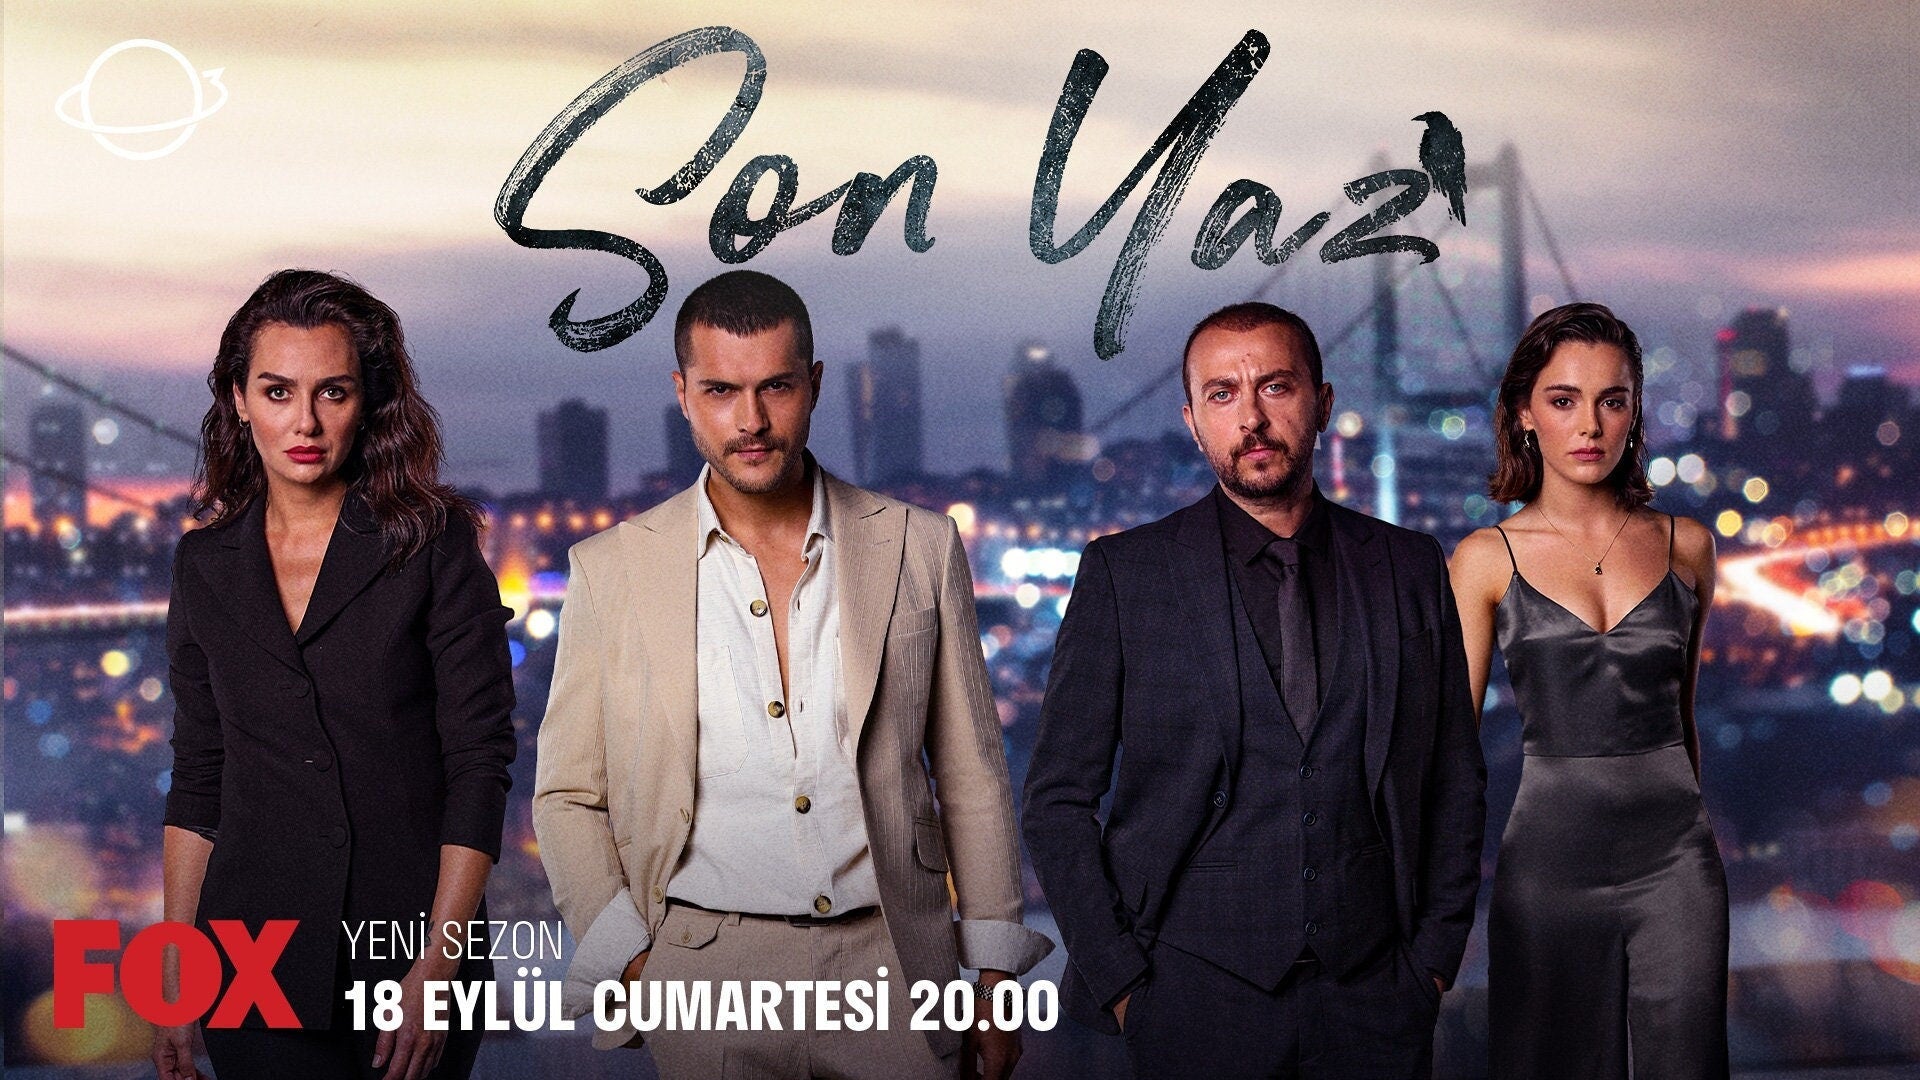 Son Yaz (Last Summer) * All Seasons * All Episodes (26 Episodes) Full HD * English / Italiano / Spanish / Deutsch / French Subtitles in USB * No Ads - Turkish TV Series